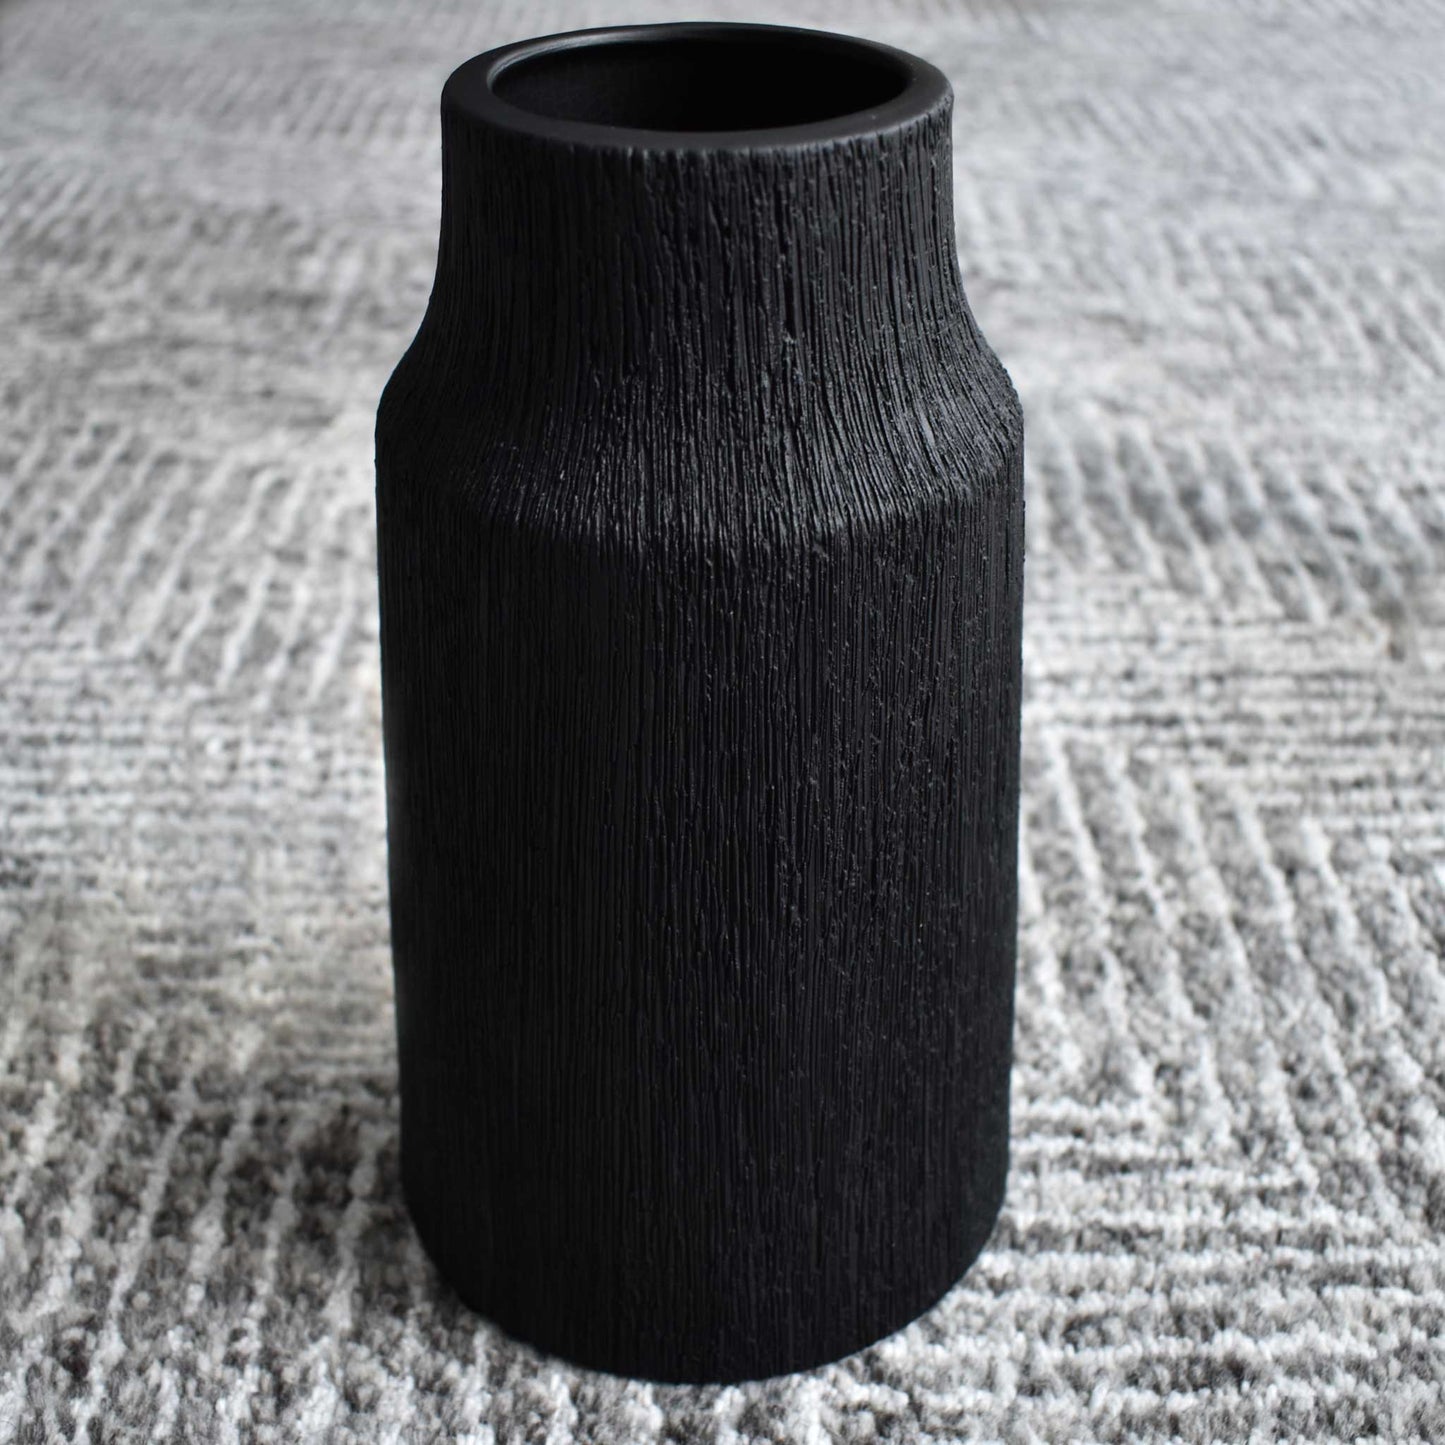 Black ceramic textured vase on black, white, and gray geometric rug.